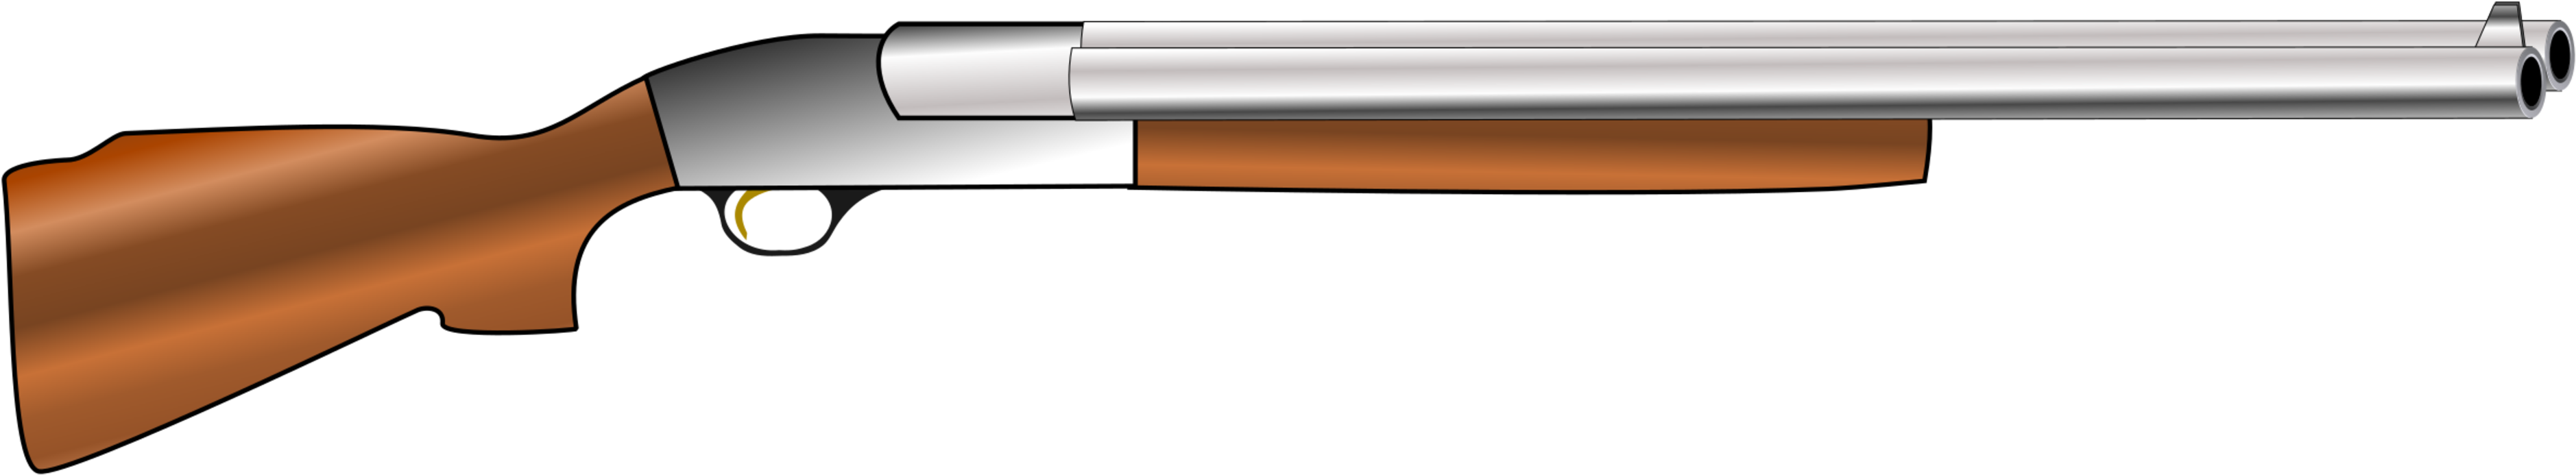 Trigger Rifle Firearm Hunting Weapon - Hunting Gun Clipart.